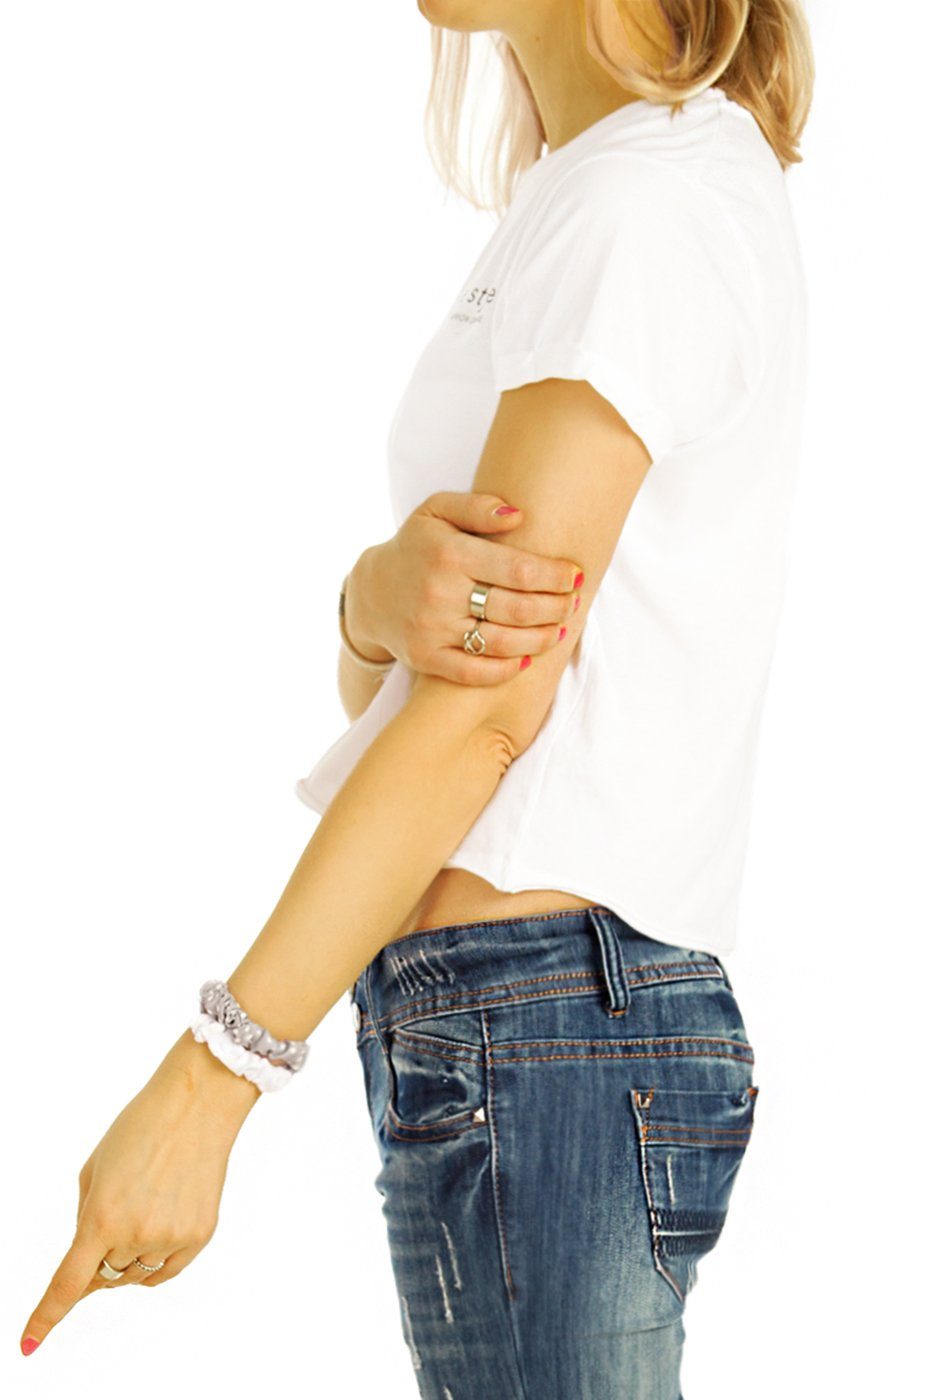 low be Straight-Jeans Hüfthose styled Damenjeans, j137p-straight waist blau gerade geschnittene 5-pocket